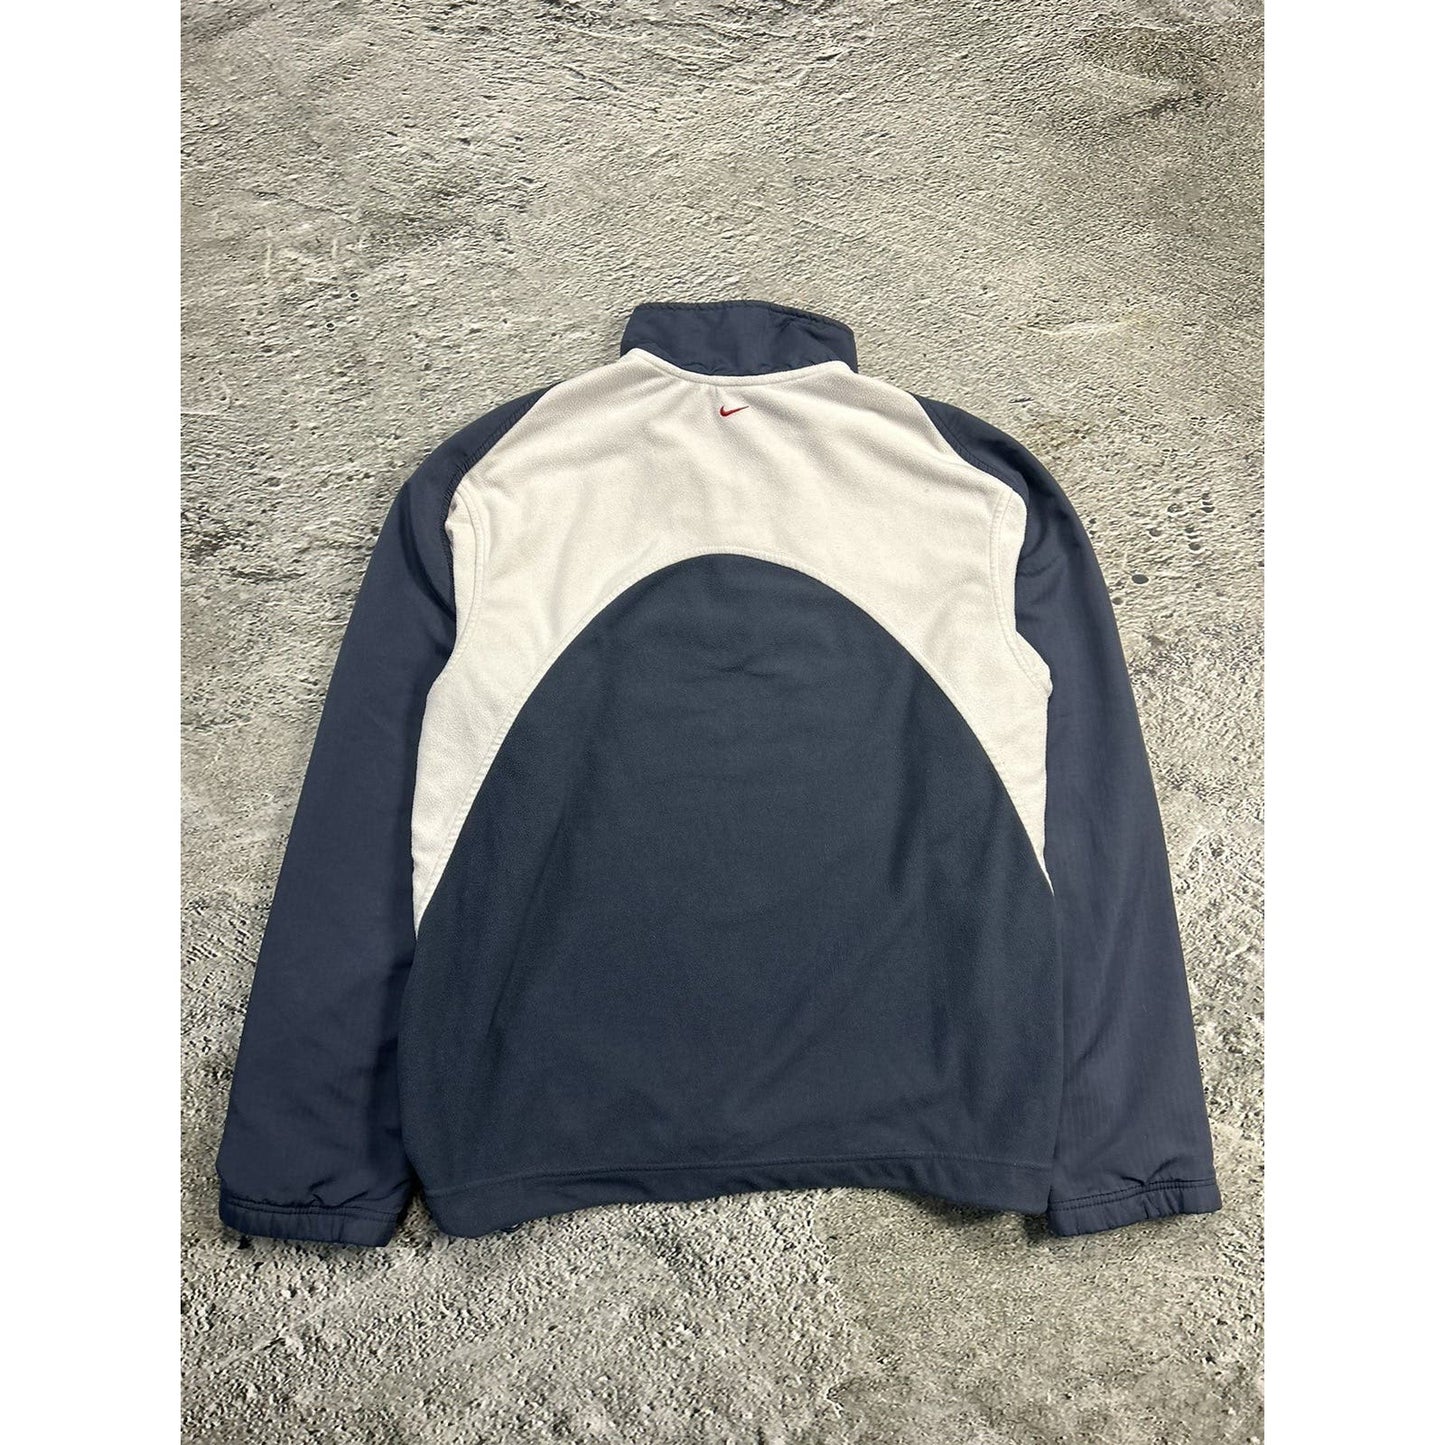 Nike TN vintage fleece jacket white reflective anorak 2000s